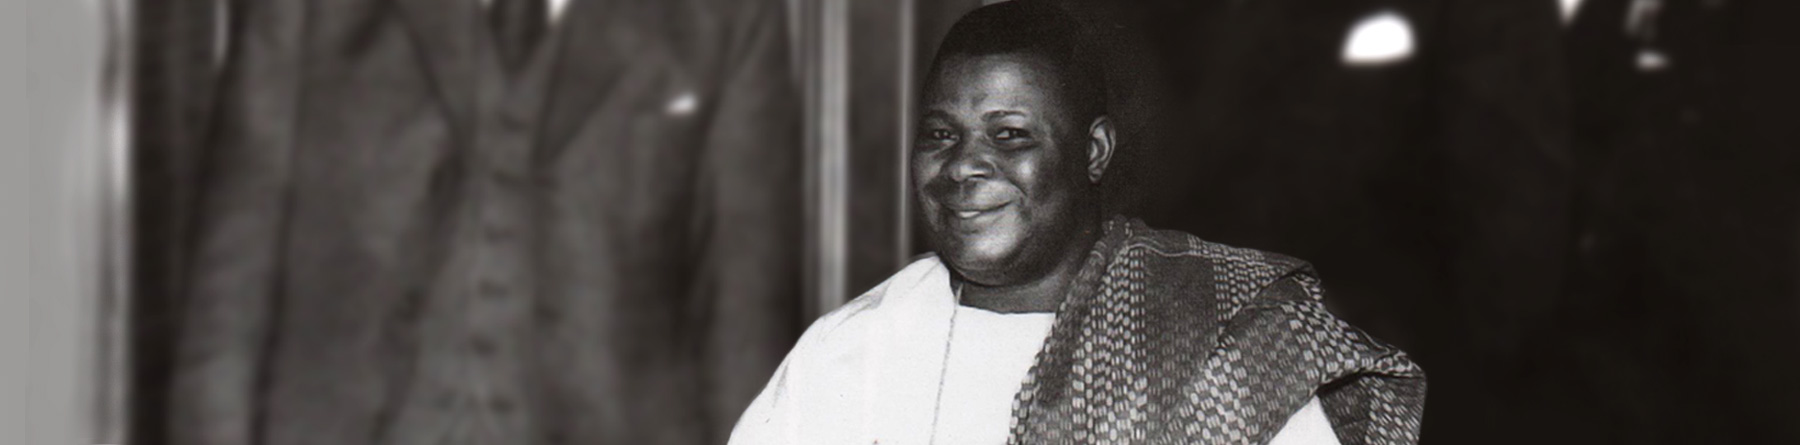 Chief Festus Samuel Okotie-Eboh